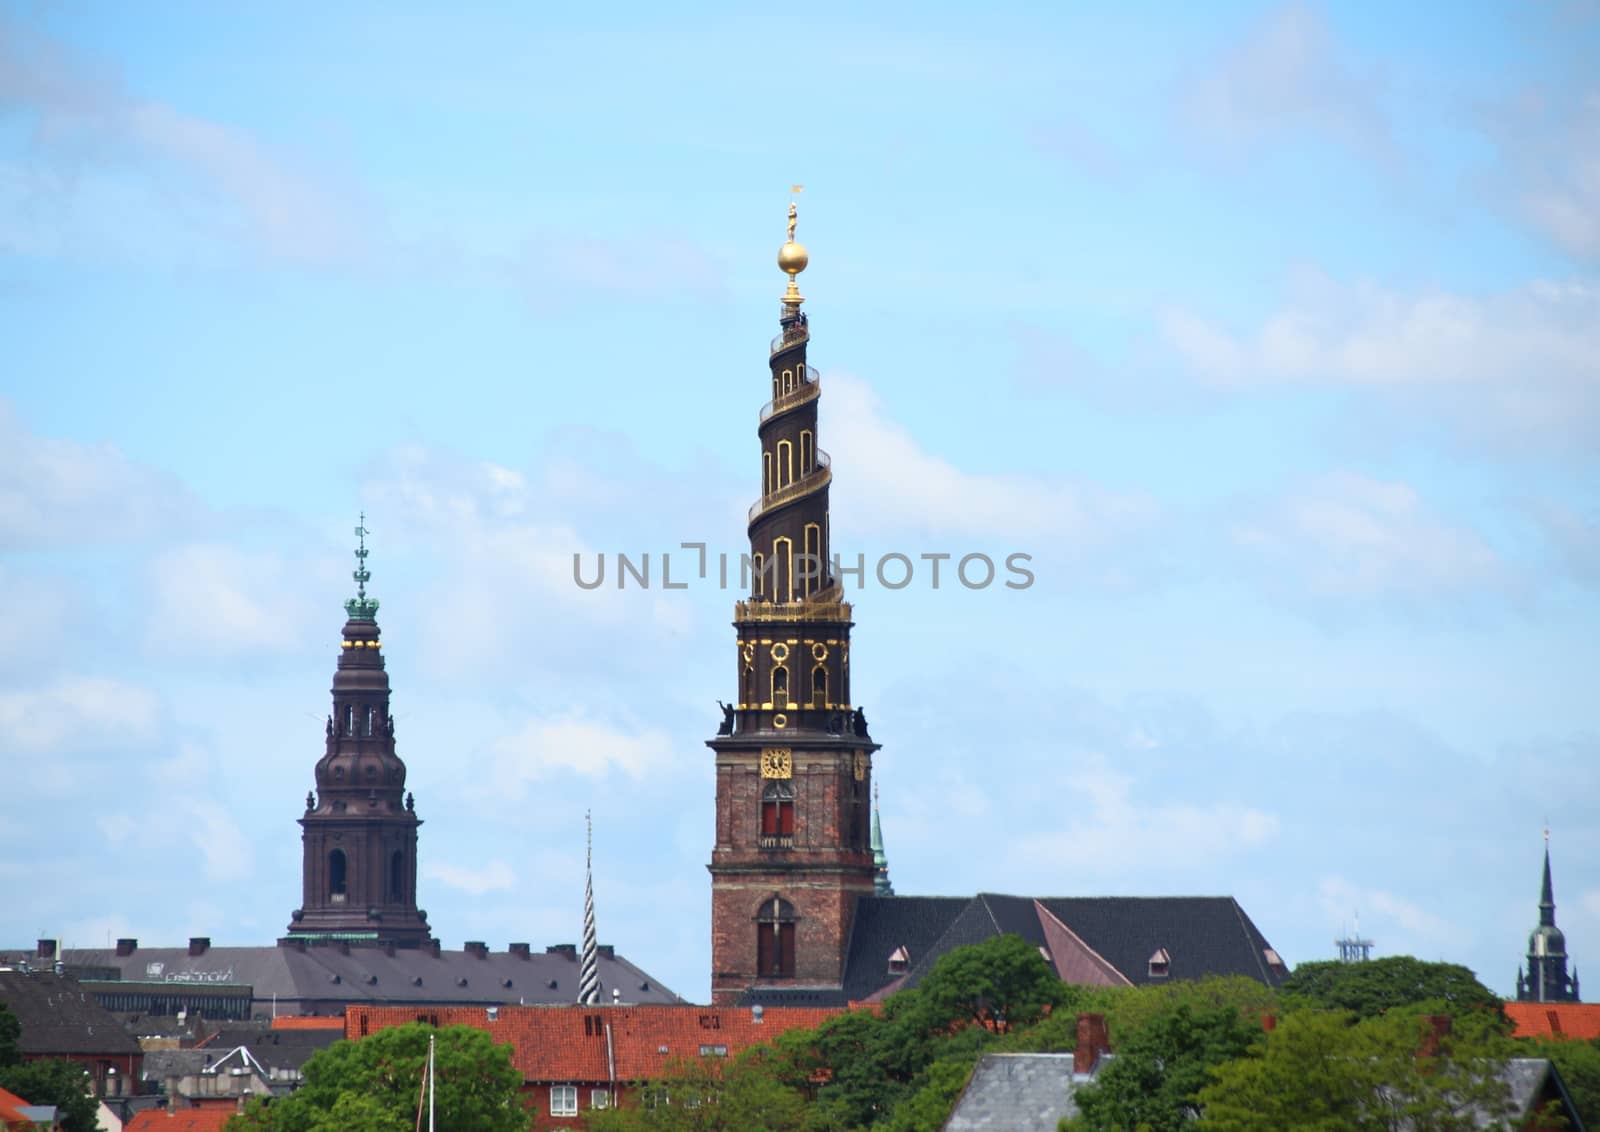 Skyline view of Copenhagen Denmark with church towers